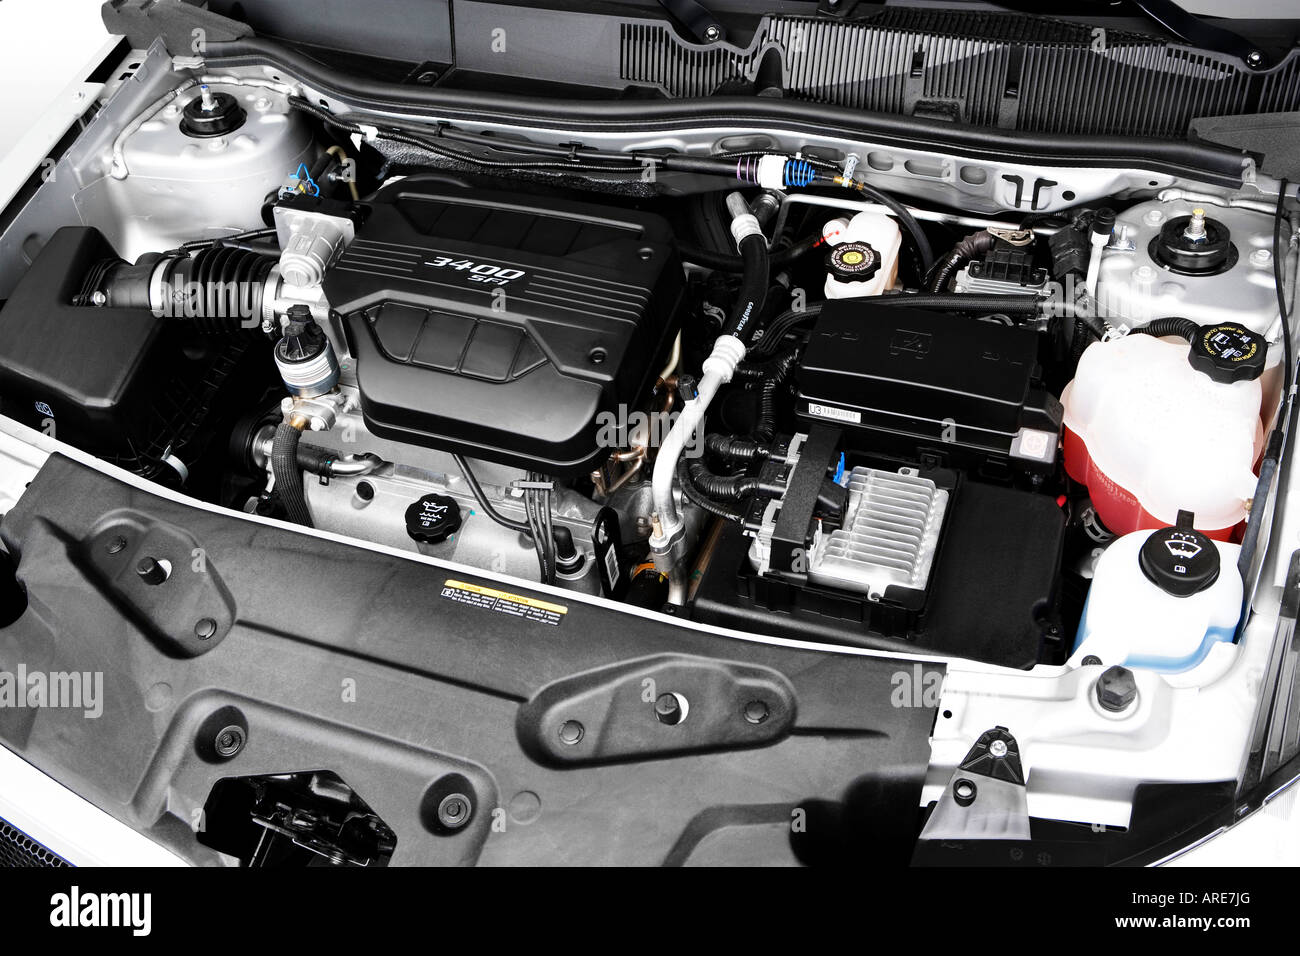 2006 Pontiac Torrent in Silver - Engine Stock Photo - Alamy